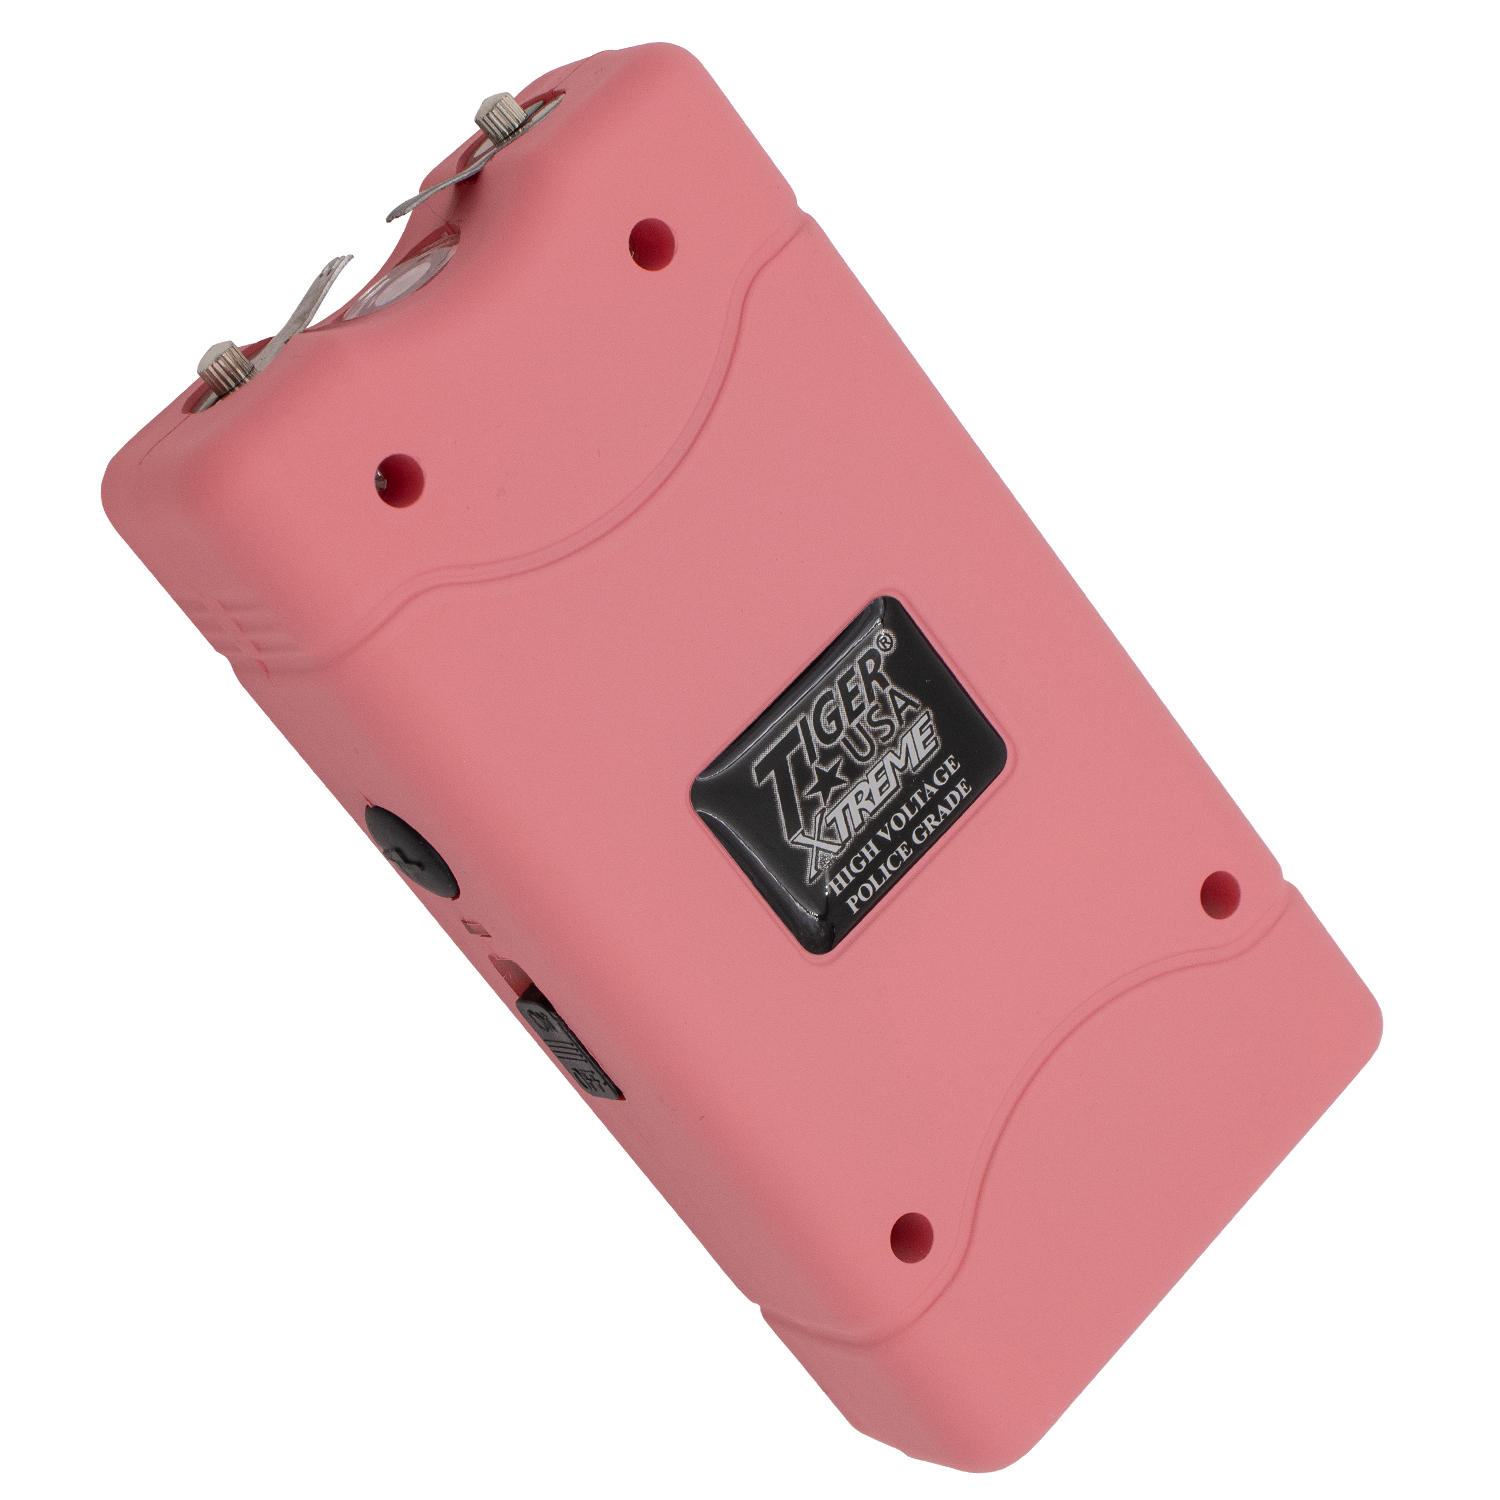 96 Mill Pink Rechargeable Stun Gun and Flash Light